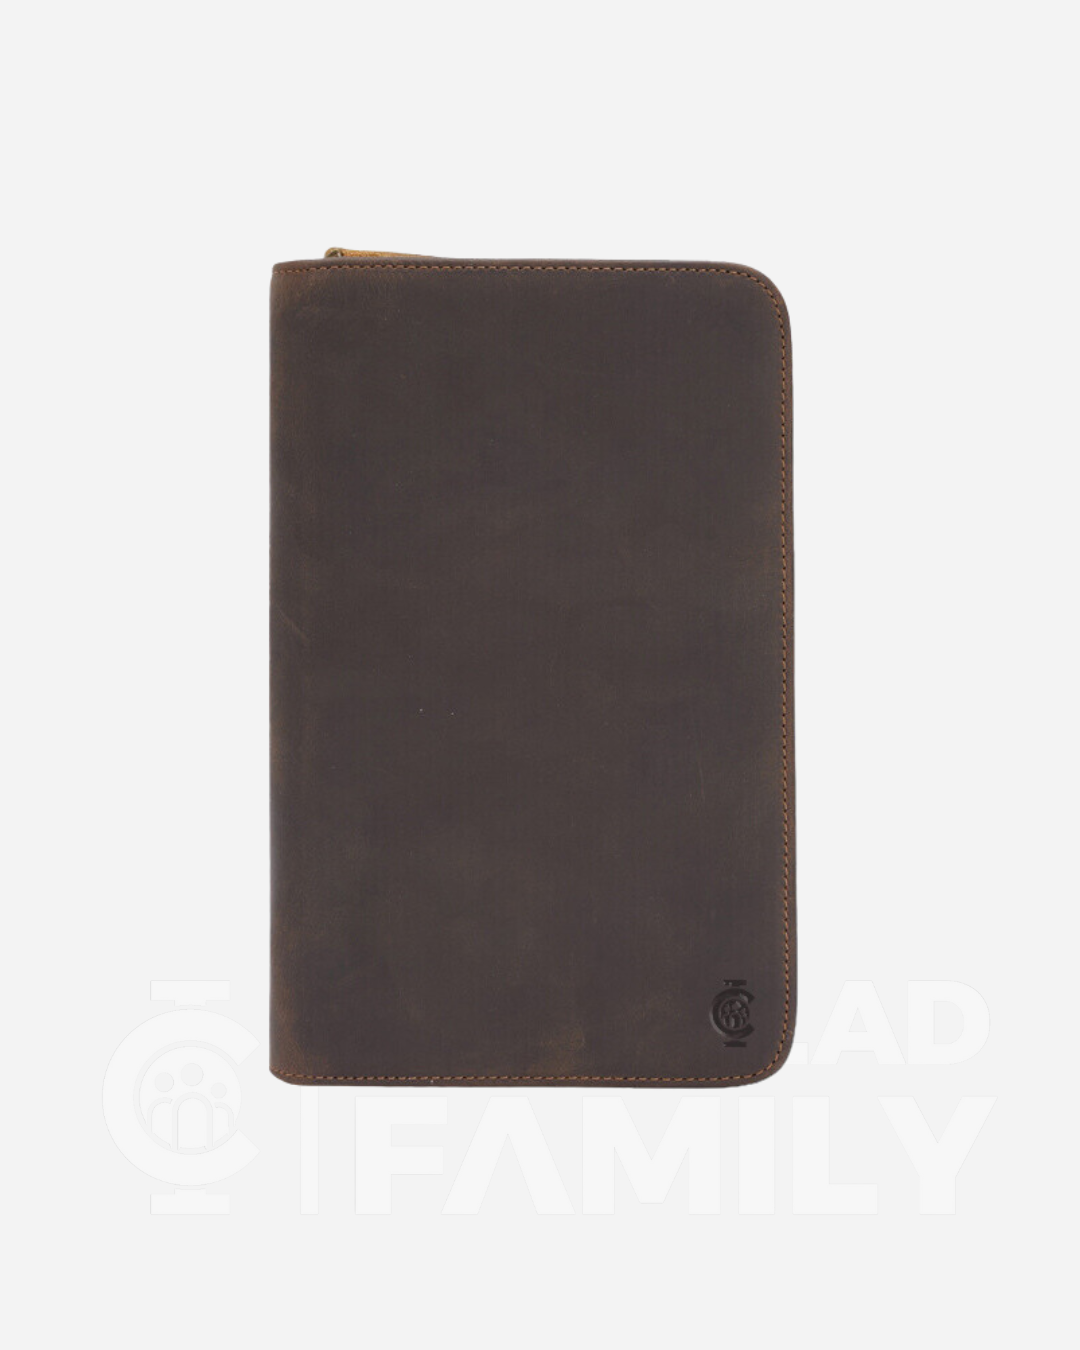 Brown leather multi-passport holder